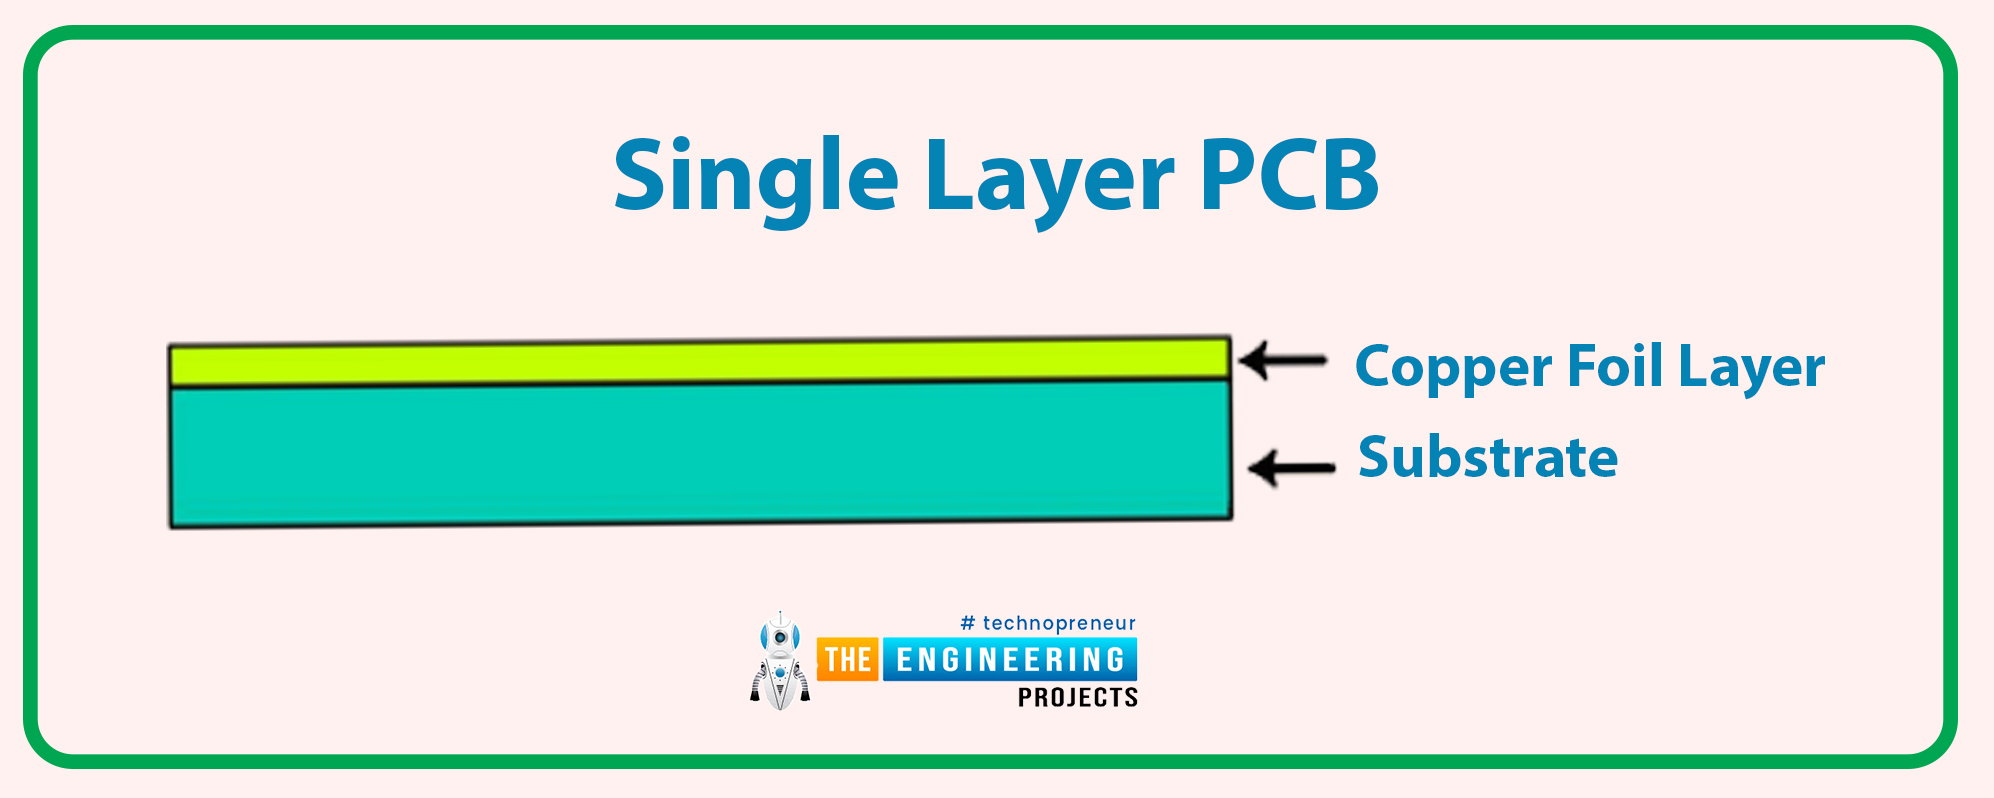 Single-layer PCB, Single-layer Definition, Construction of single layer, Types of singles layer PCB